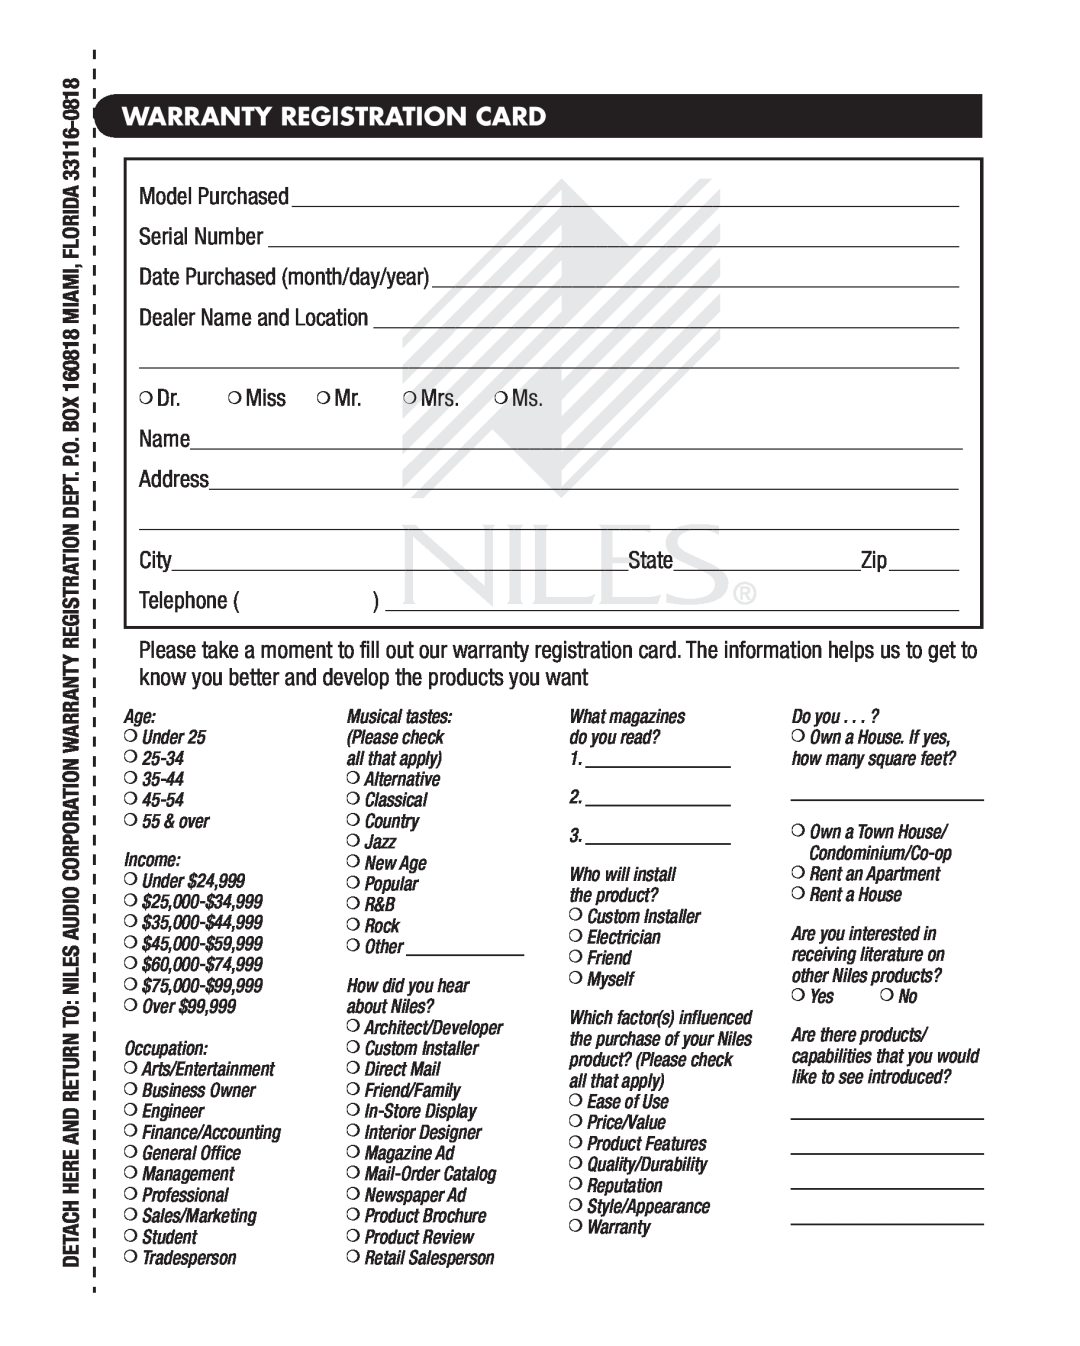 Niles Audio CAM-PB manual Warranty Registration Card 